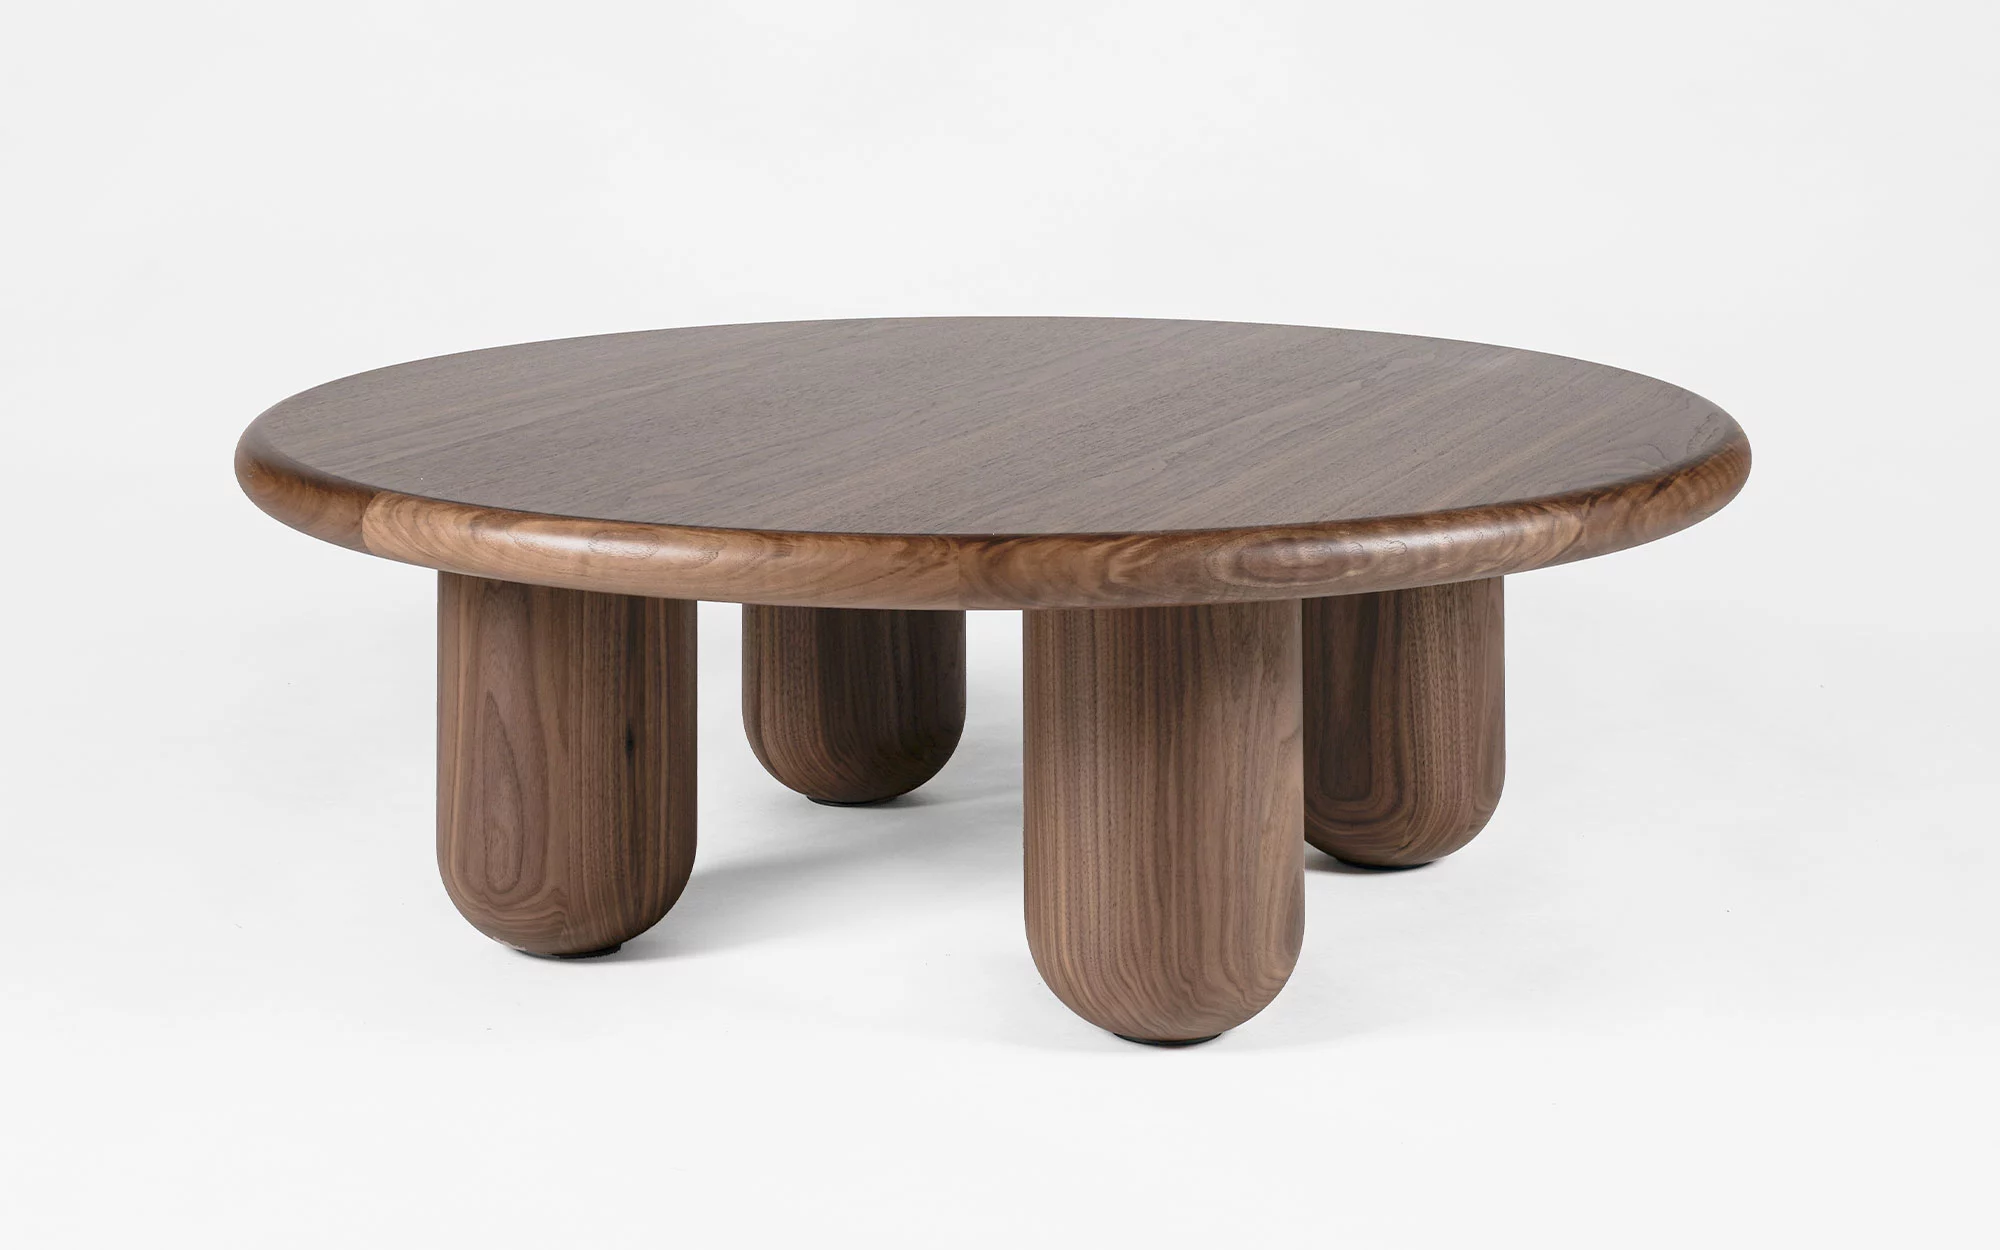 Organism coffee table - Jaime Hayon - PAD London 2022.